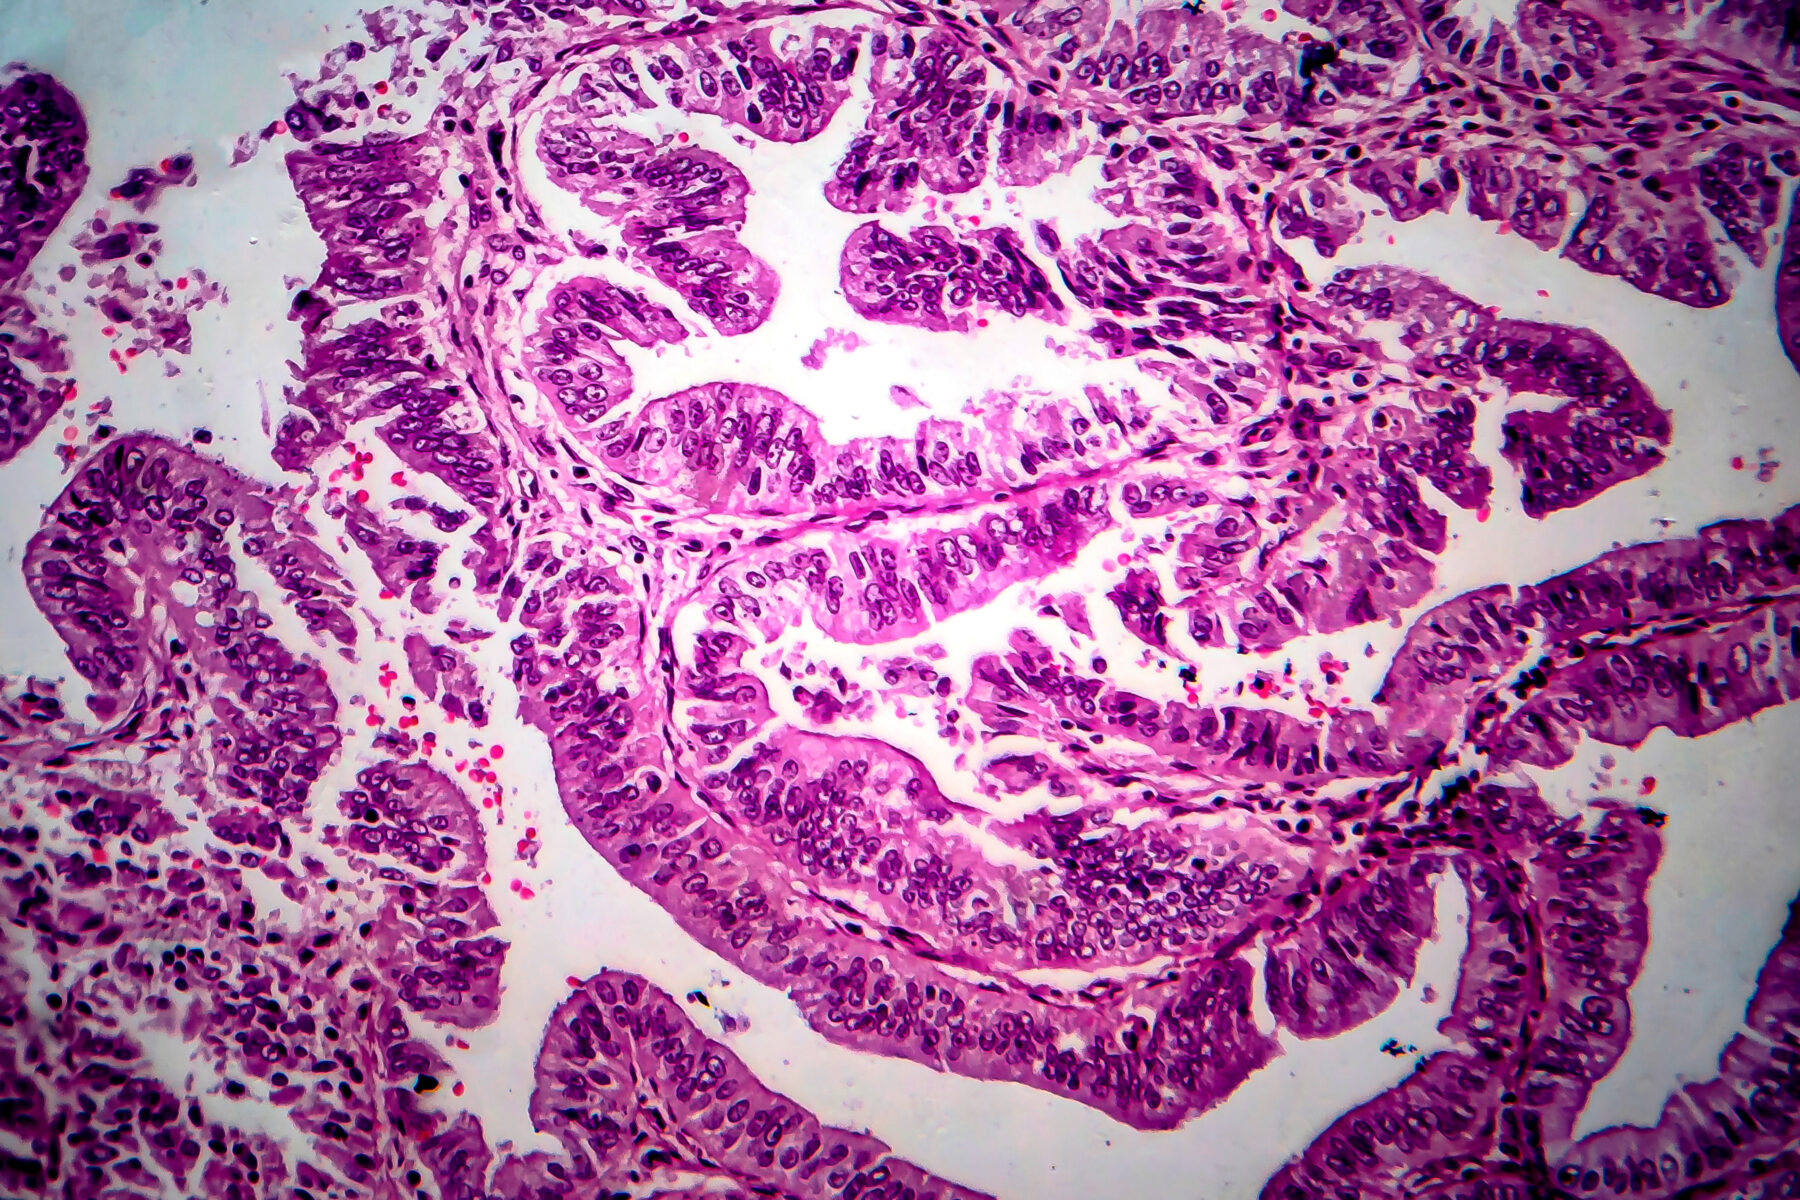 Endometrial adenocarcinoma cells viewed under the microscope